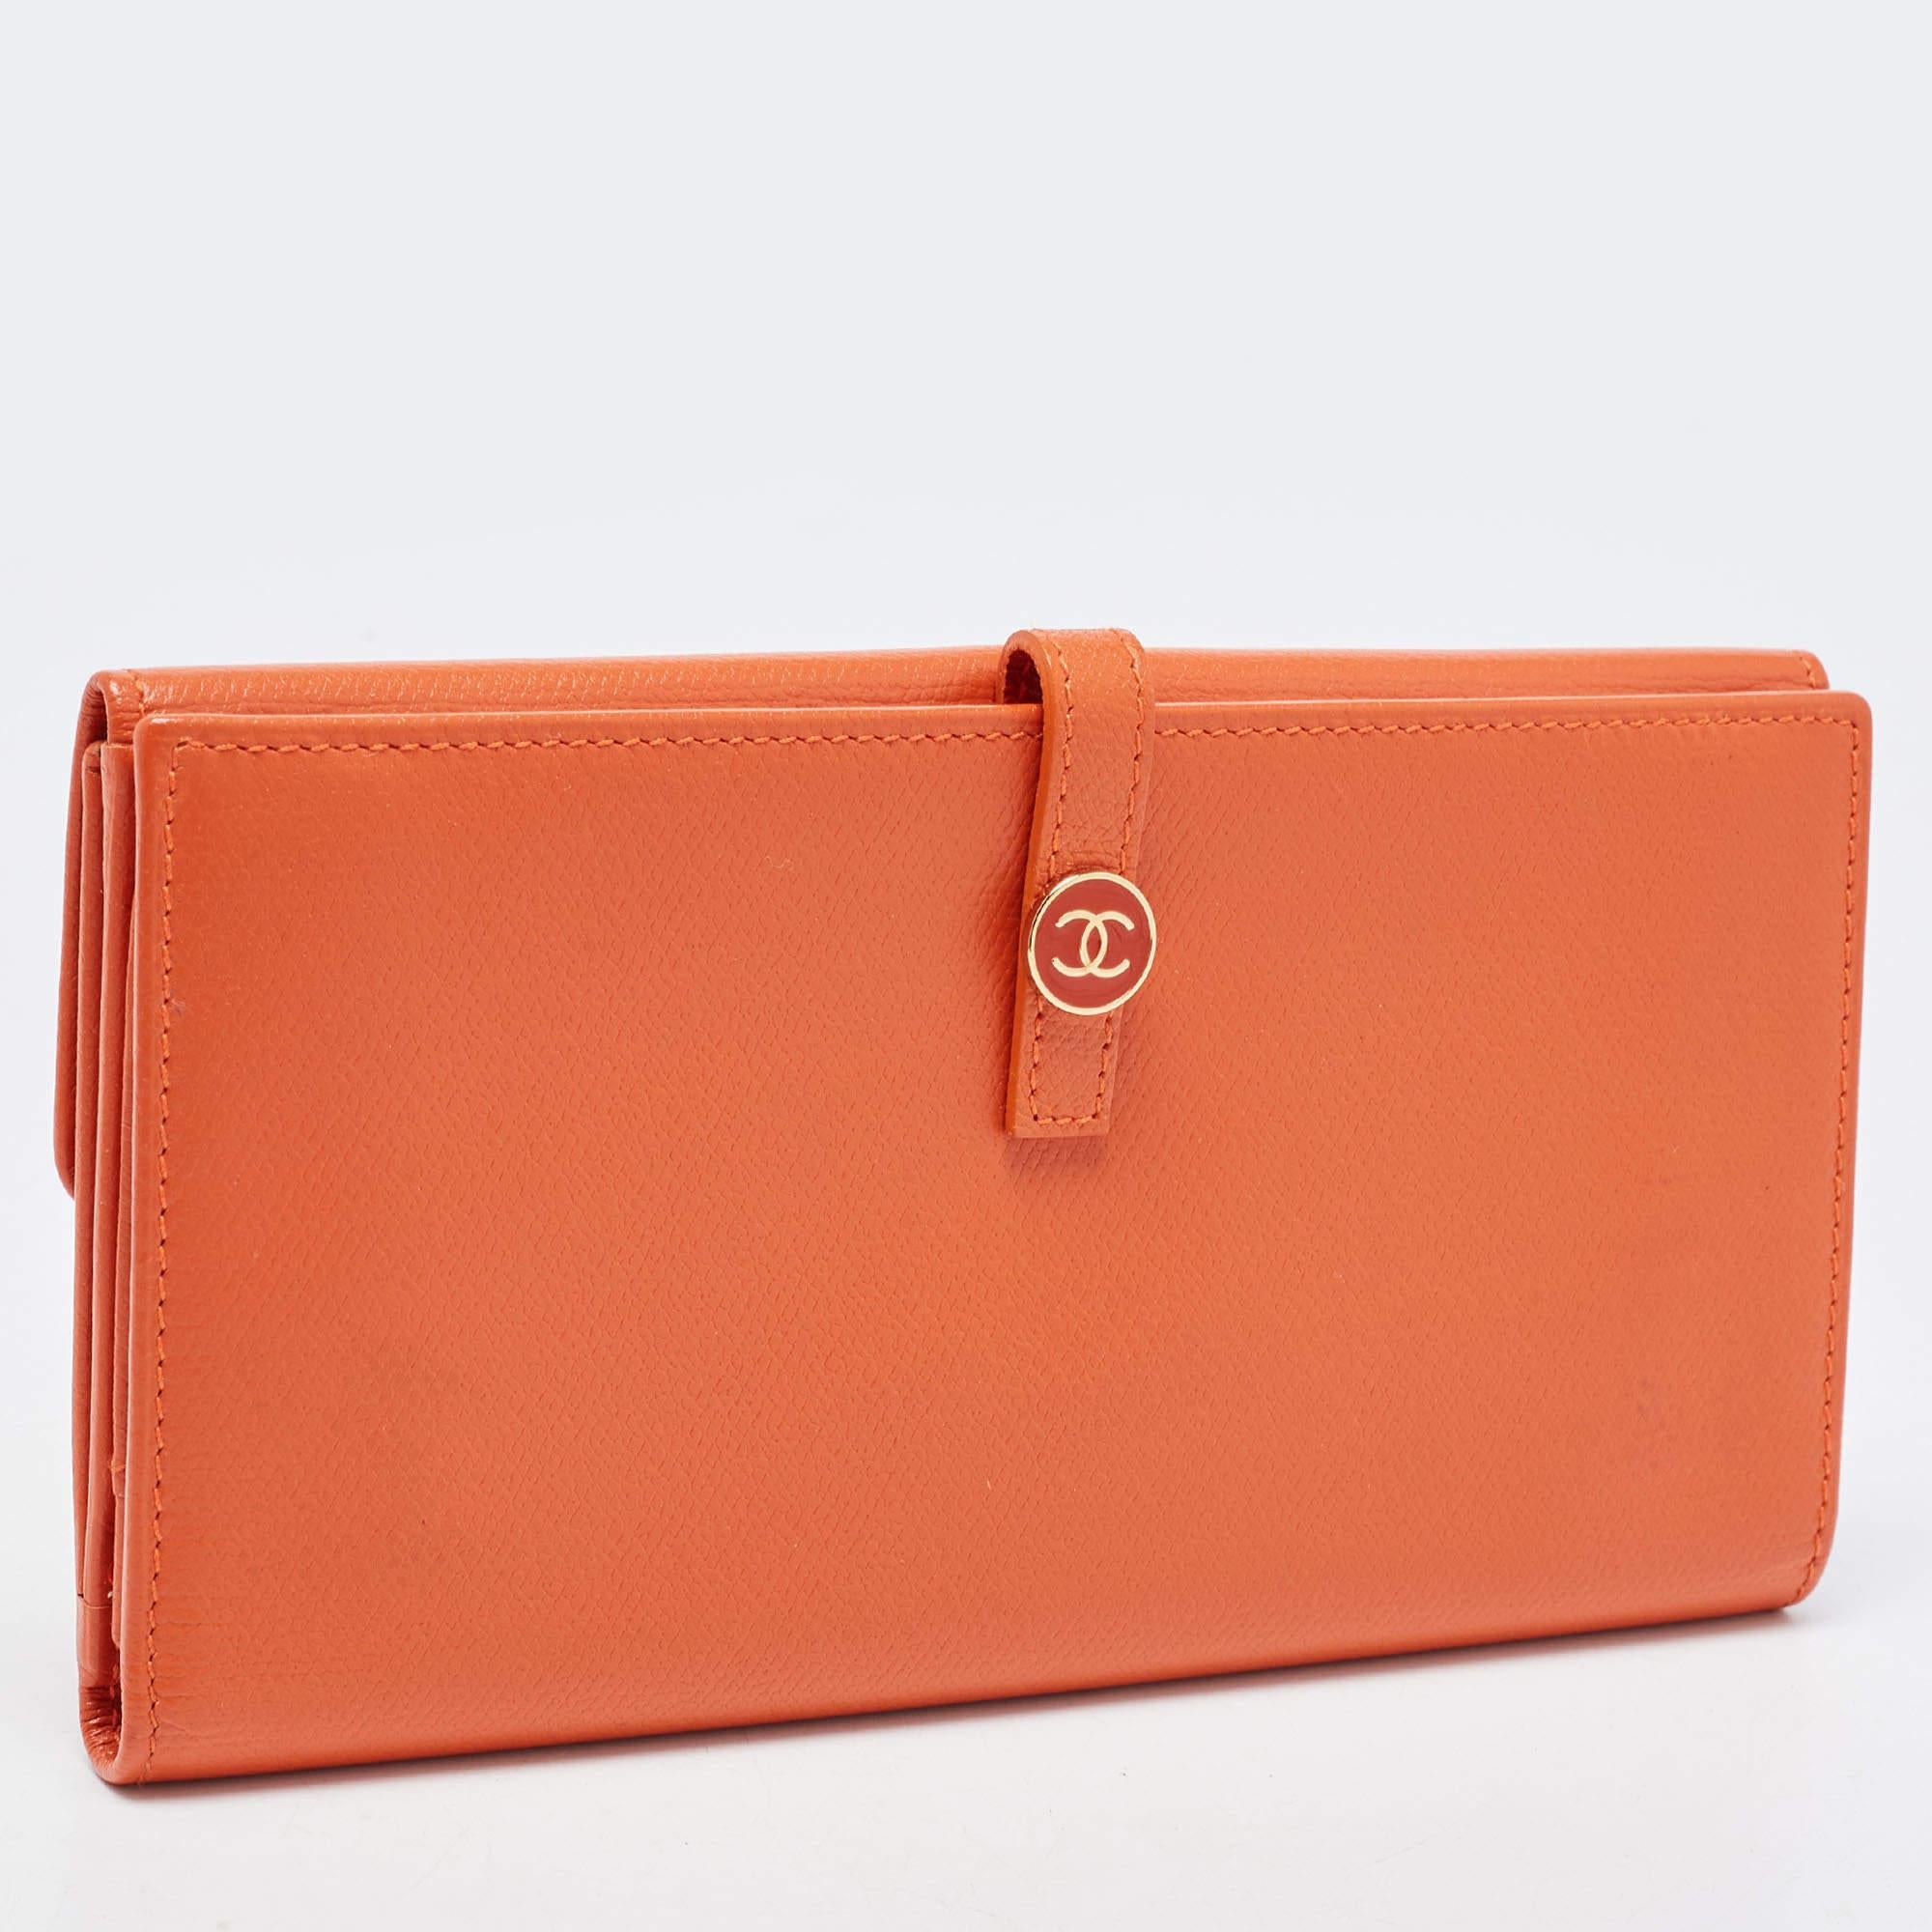 Chanel Orange Leather CC Flap Continental Wallet In Good Condition For Sale In Dubai, Al Qouz 2